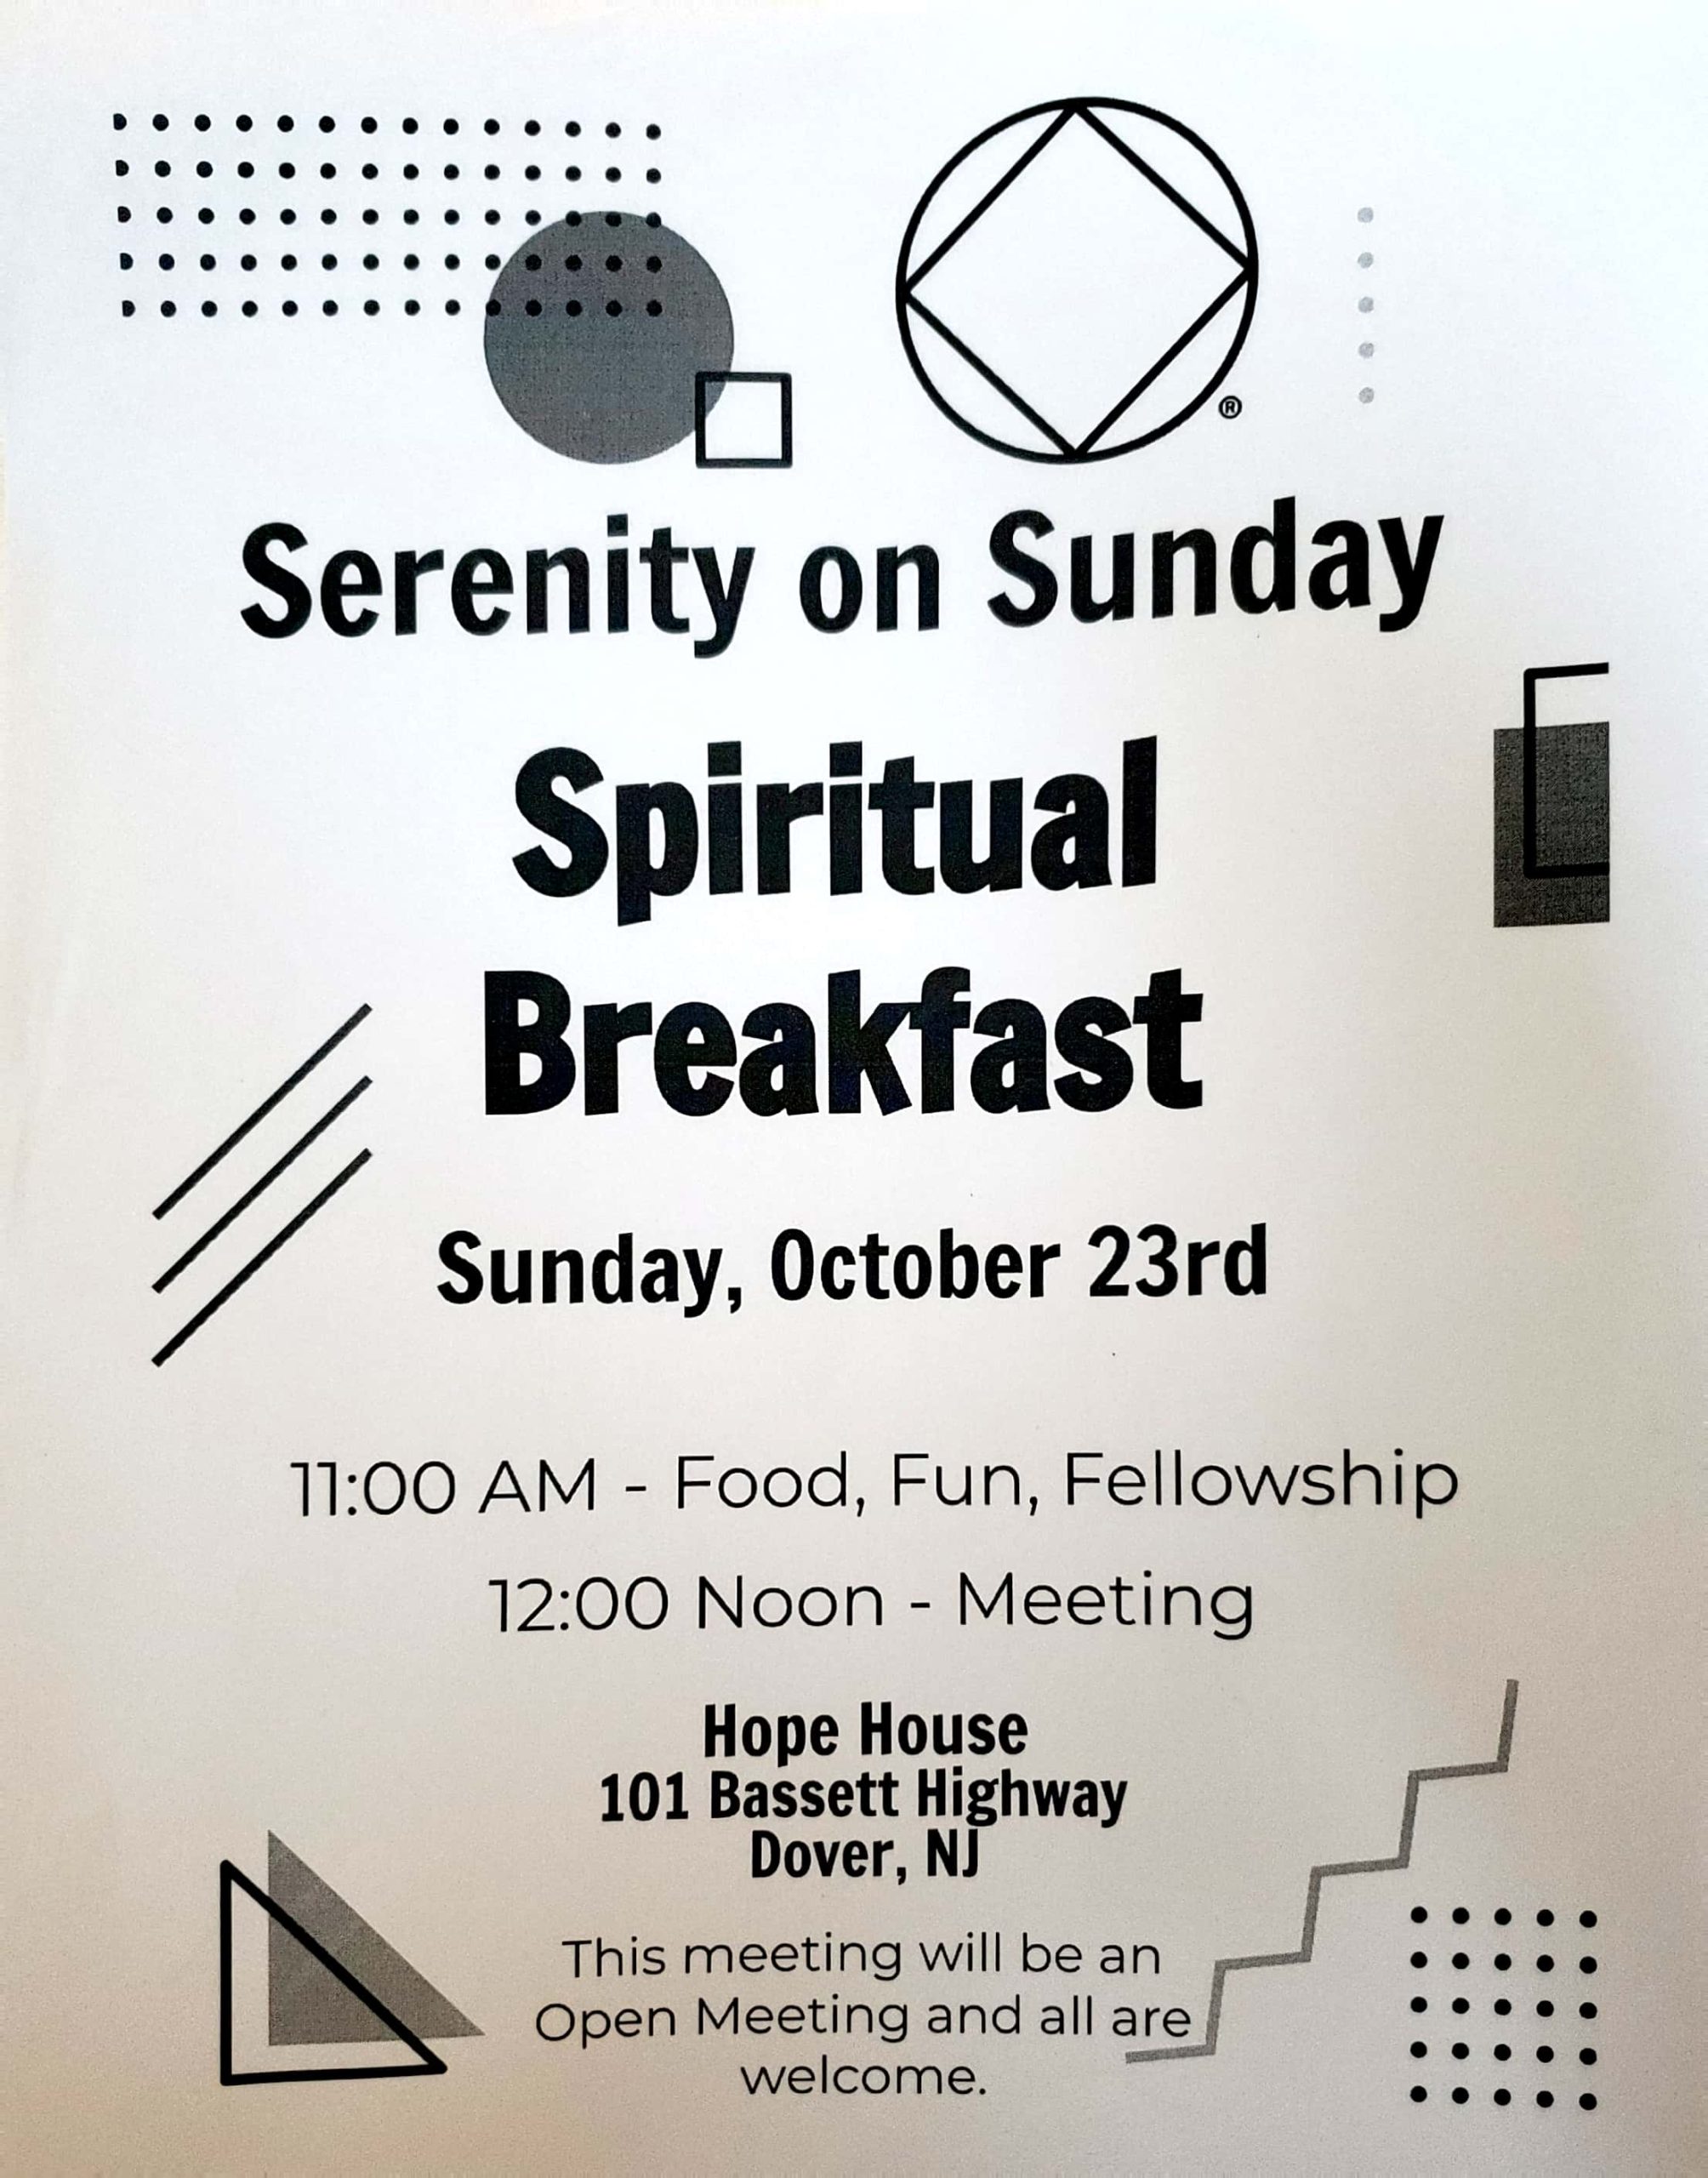 Serenity on Sunday Spiritual Breakfast @ Hope House